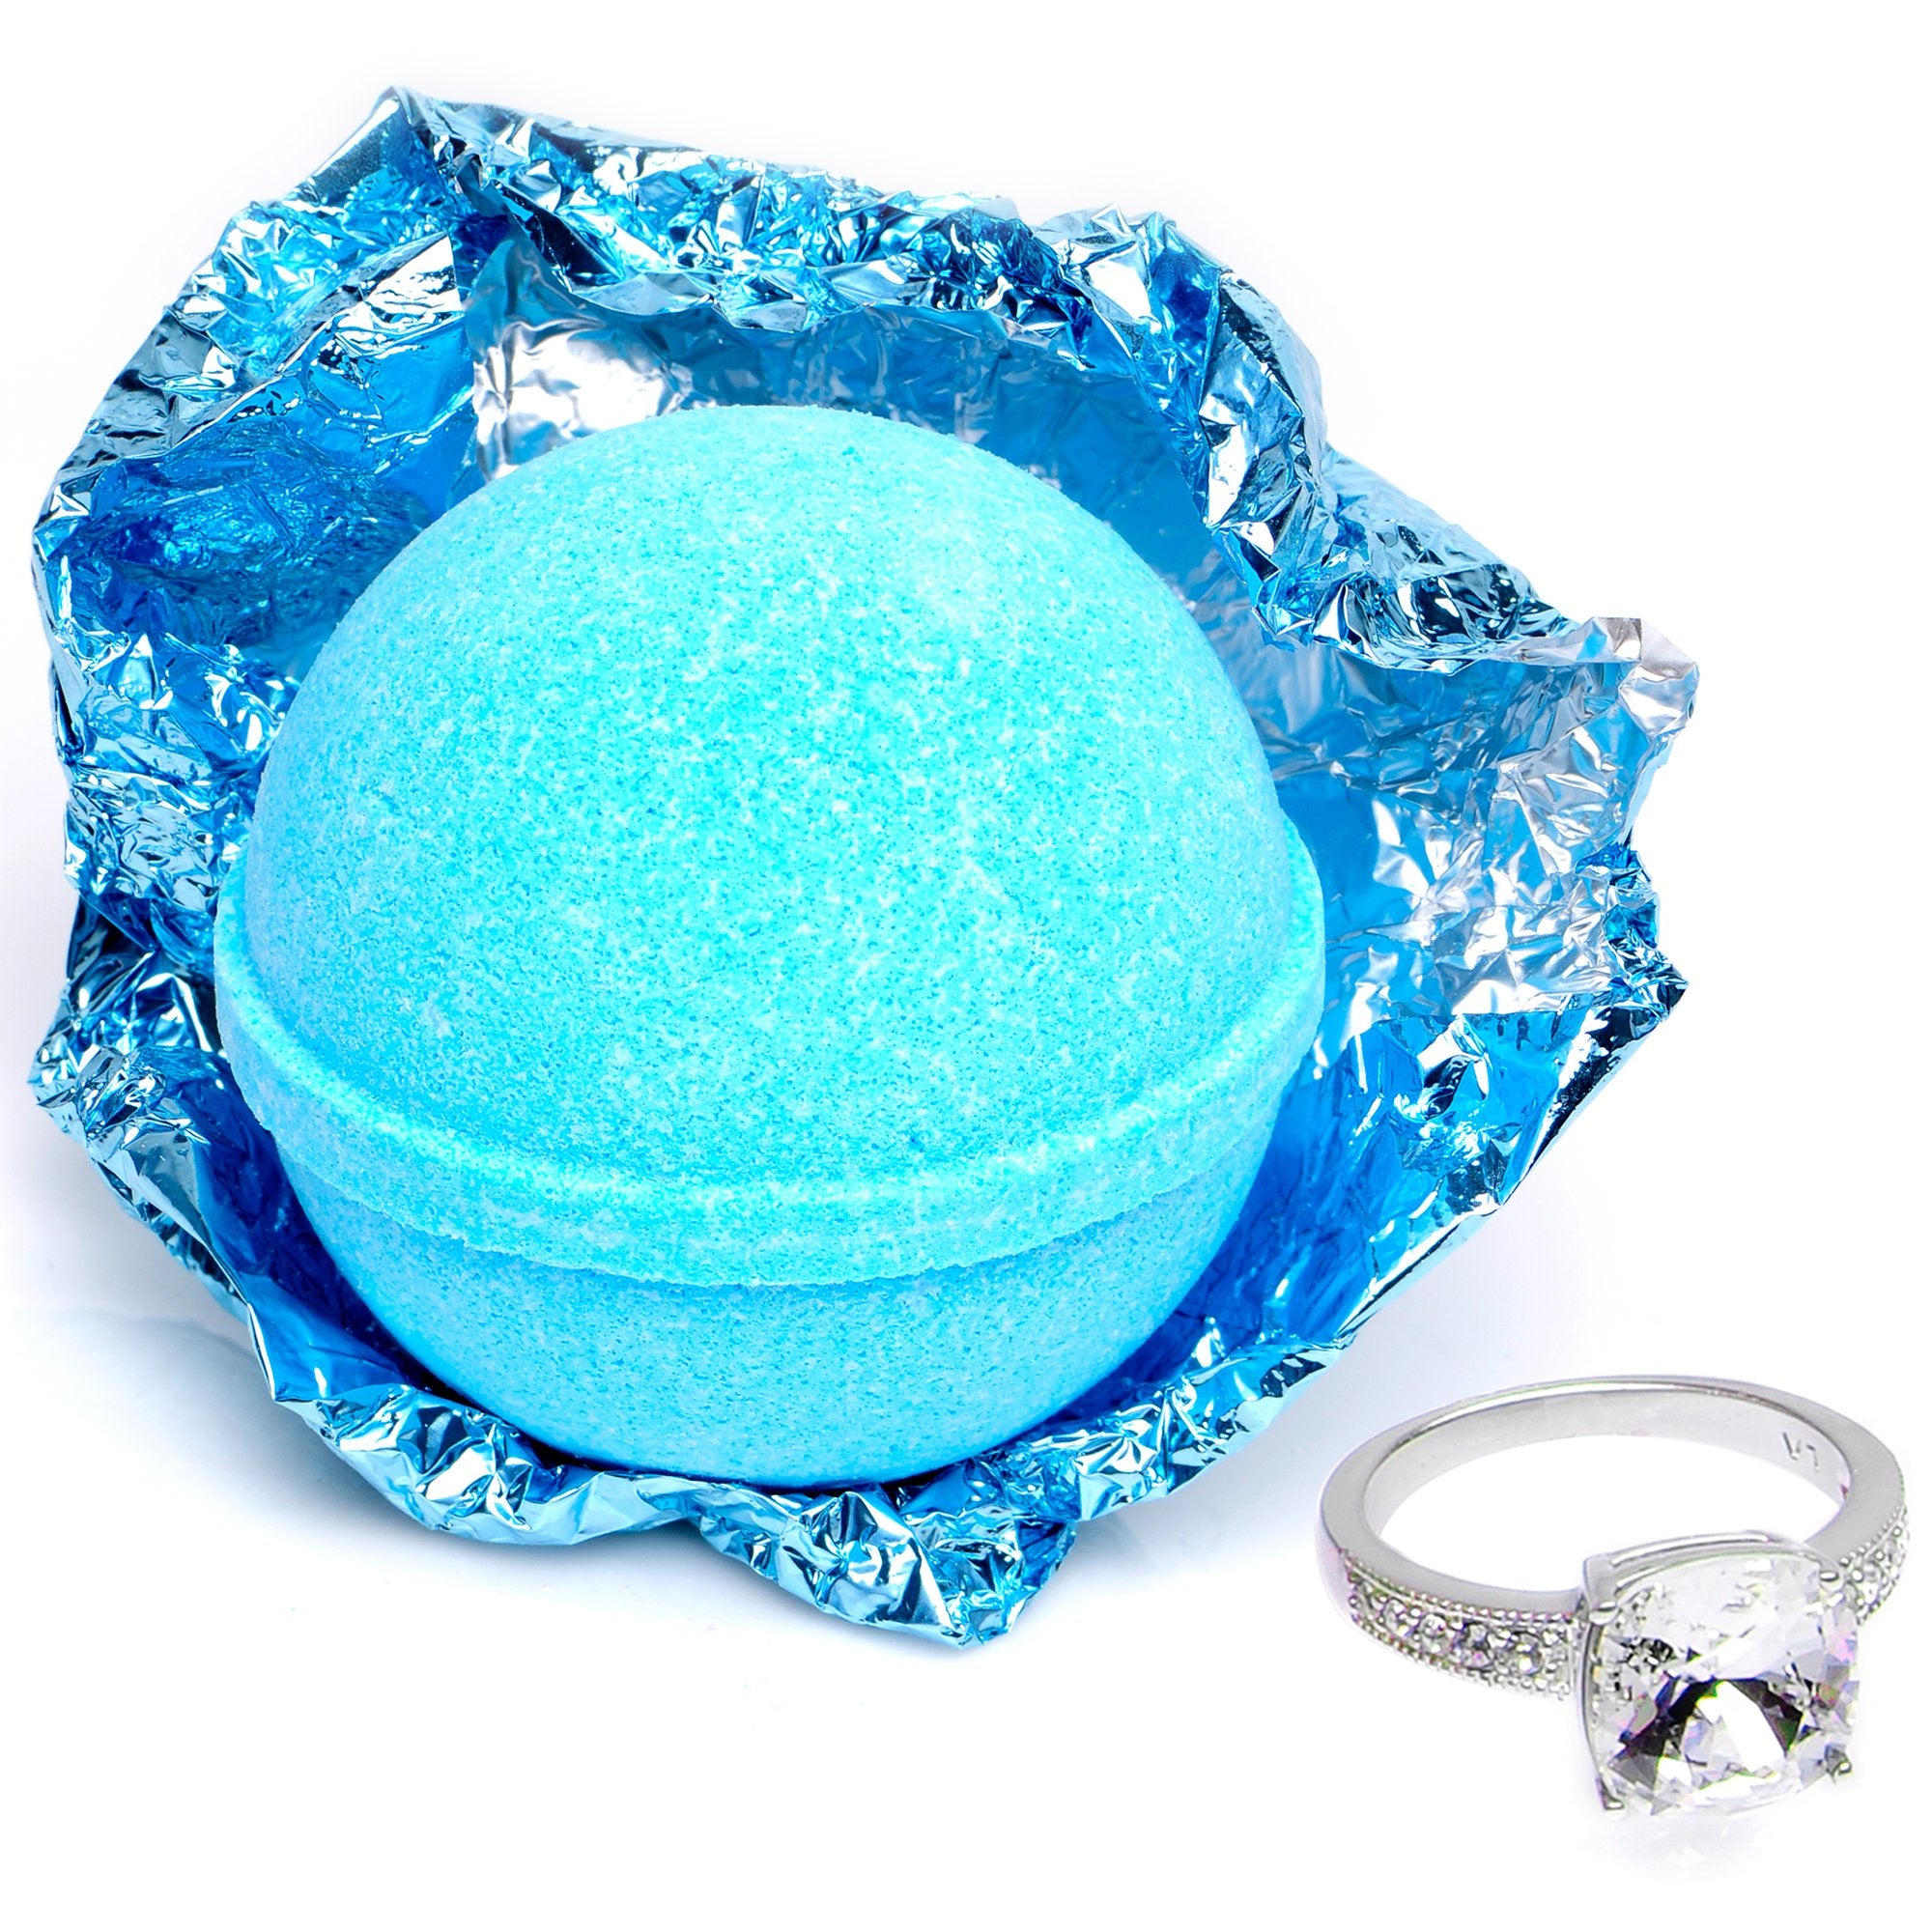 Ocean Breeze Bath Bomb with Jewelry Ring Inside